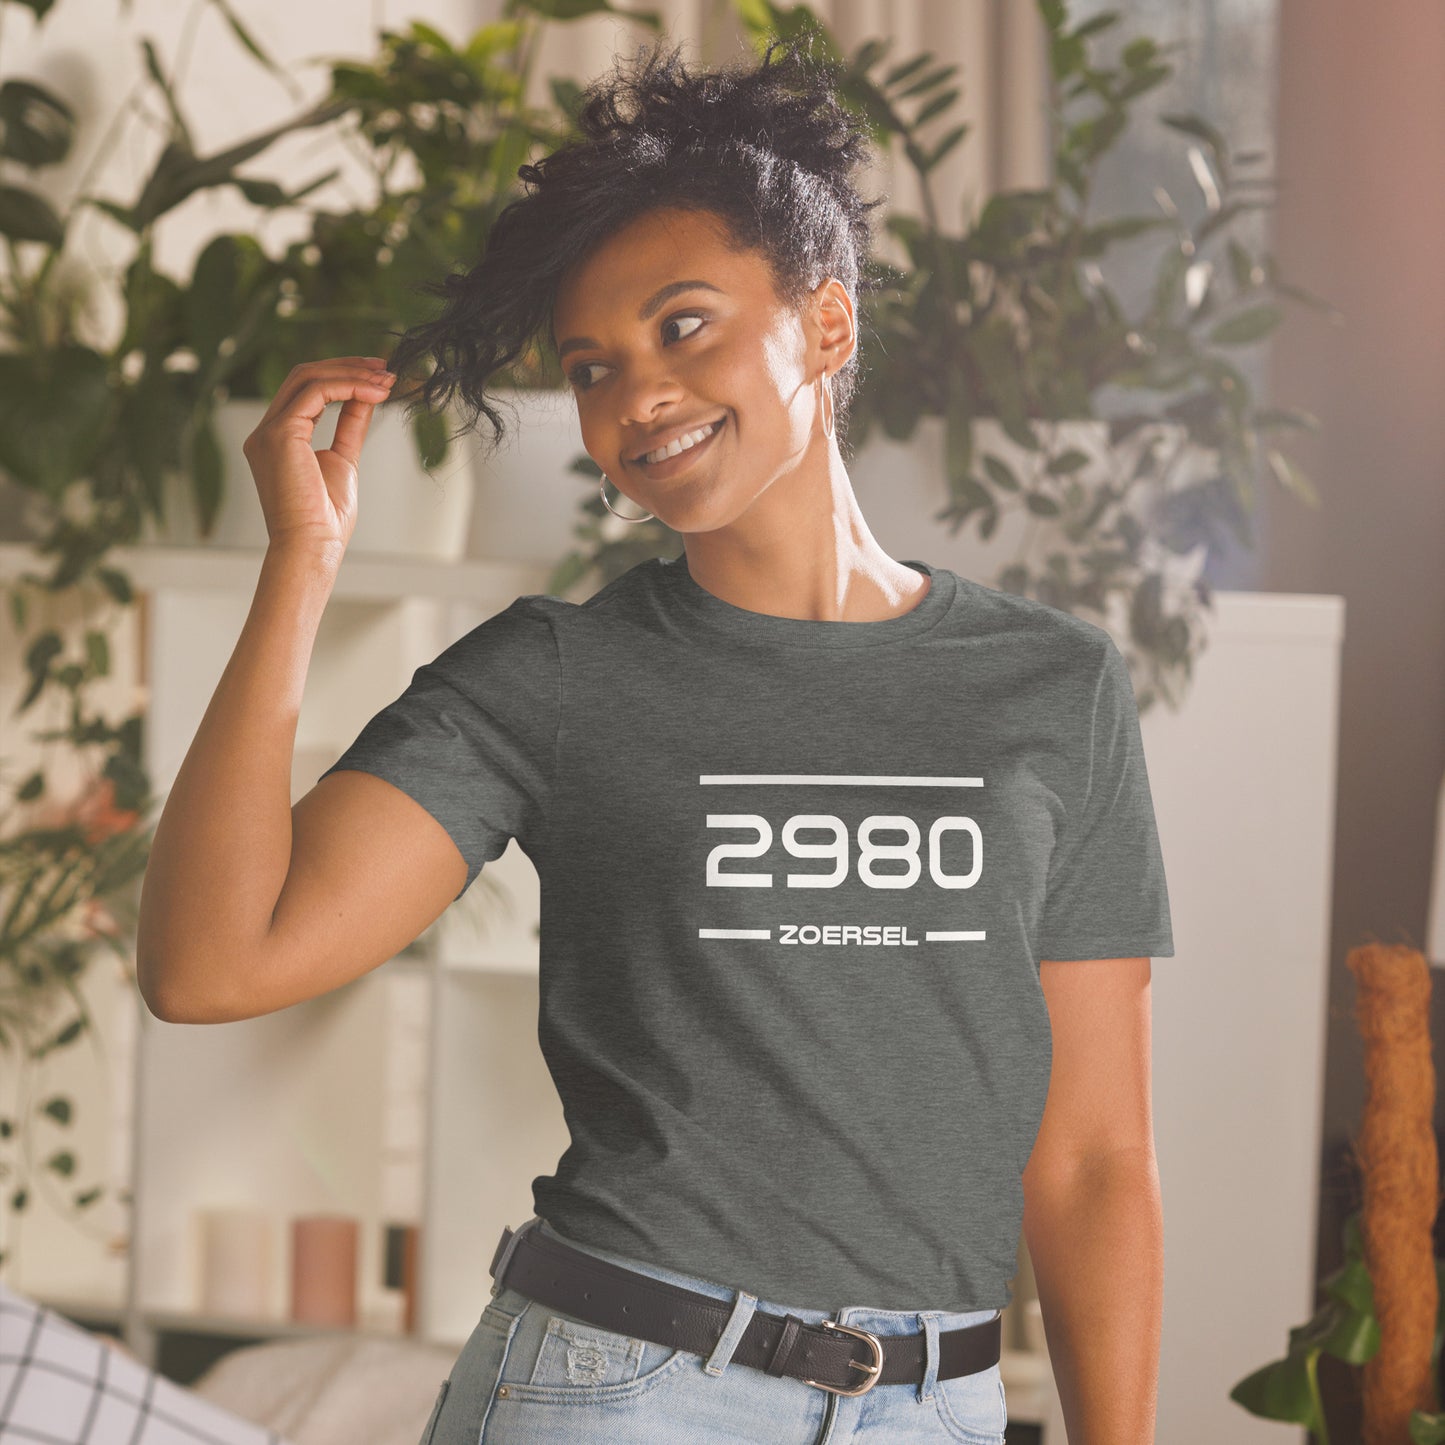 Tshirt - 2980 - Zoersel